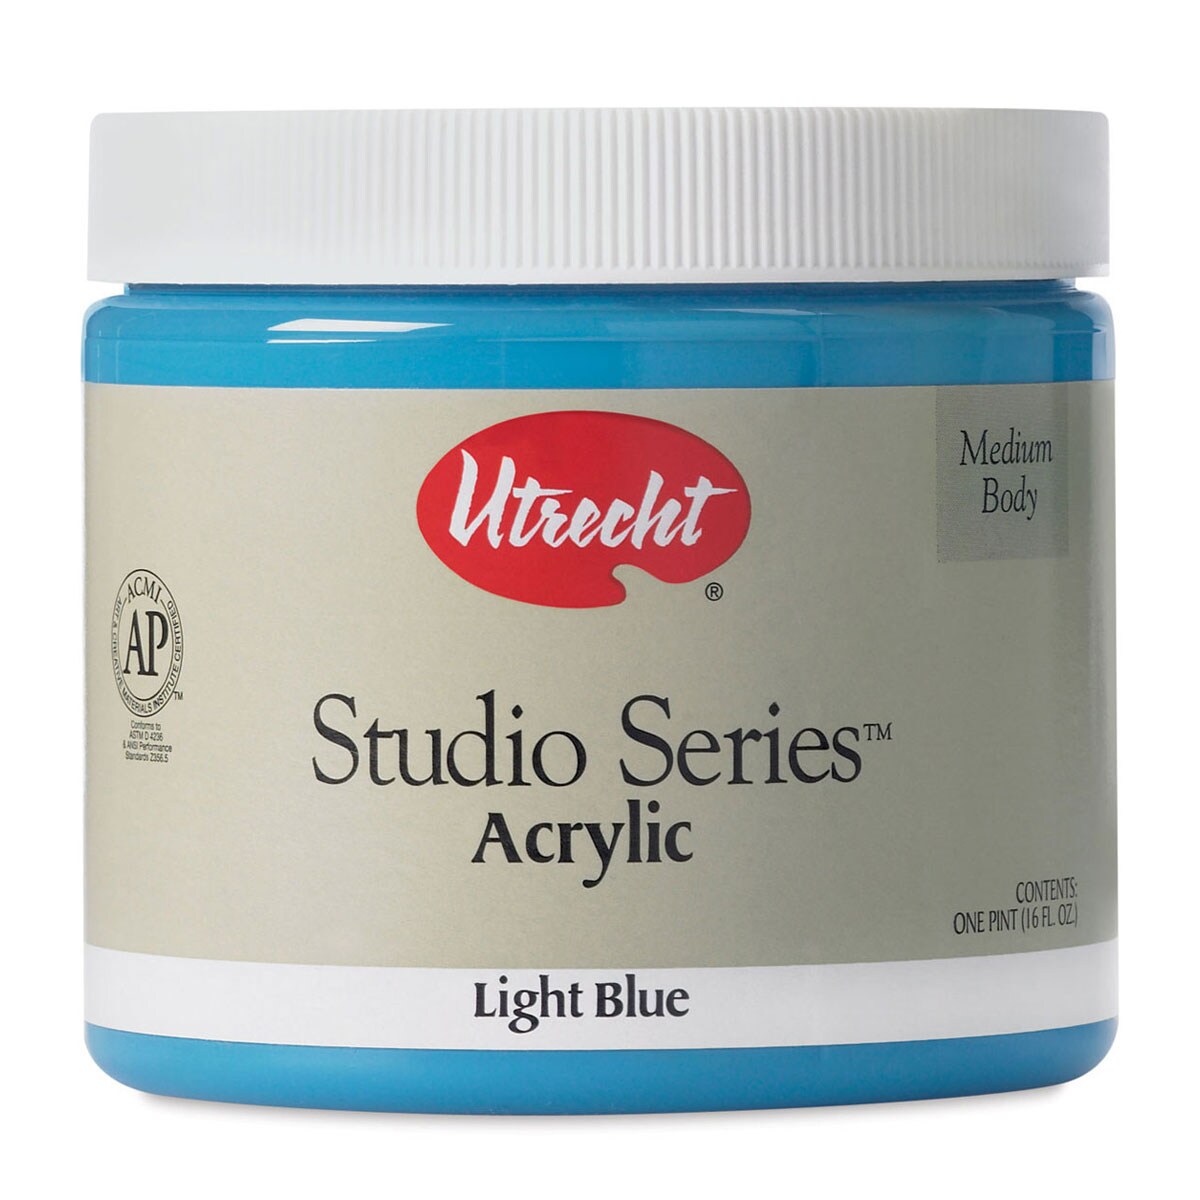 Utrecht Studio Series Acrylic Paint - Light Blue, Pint